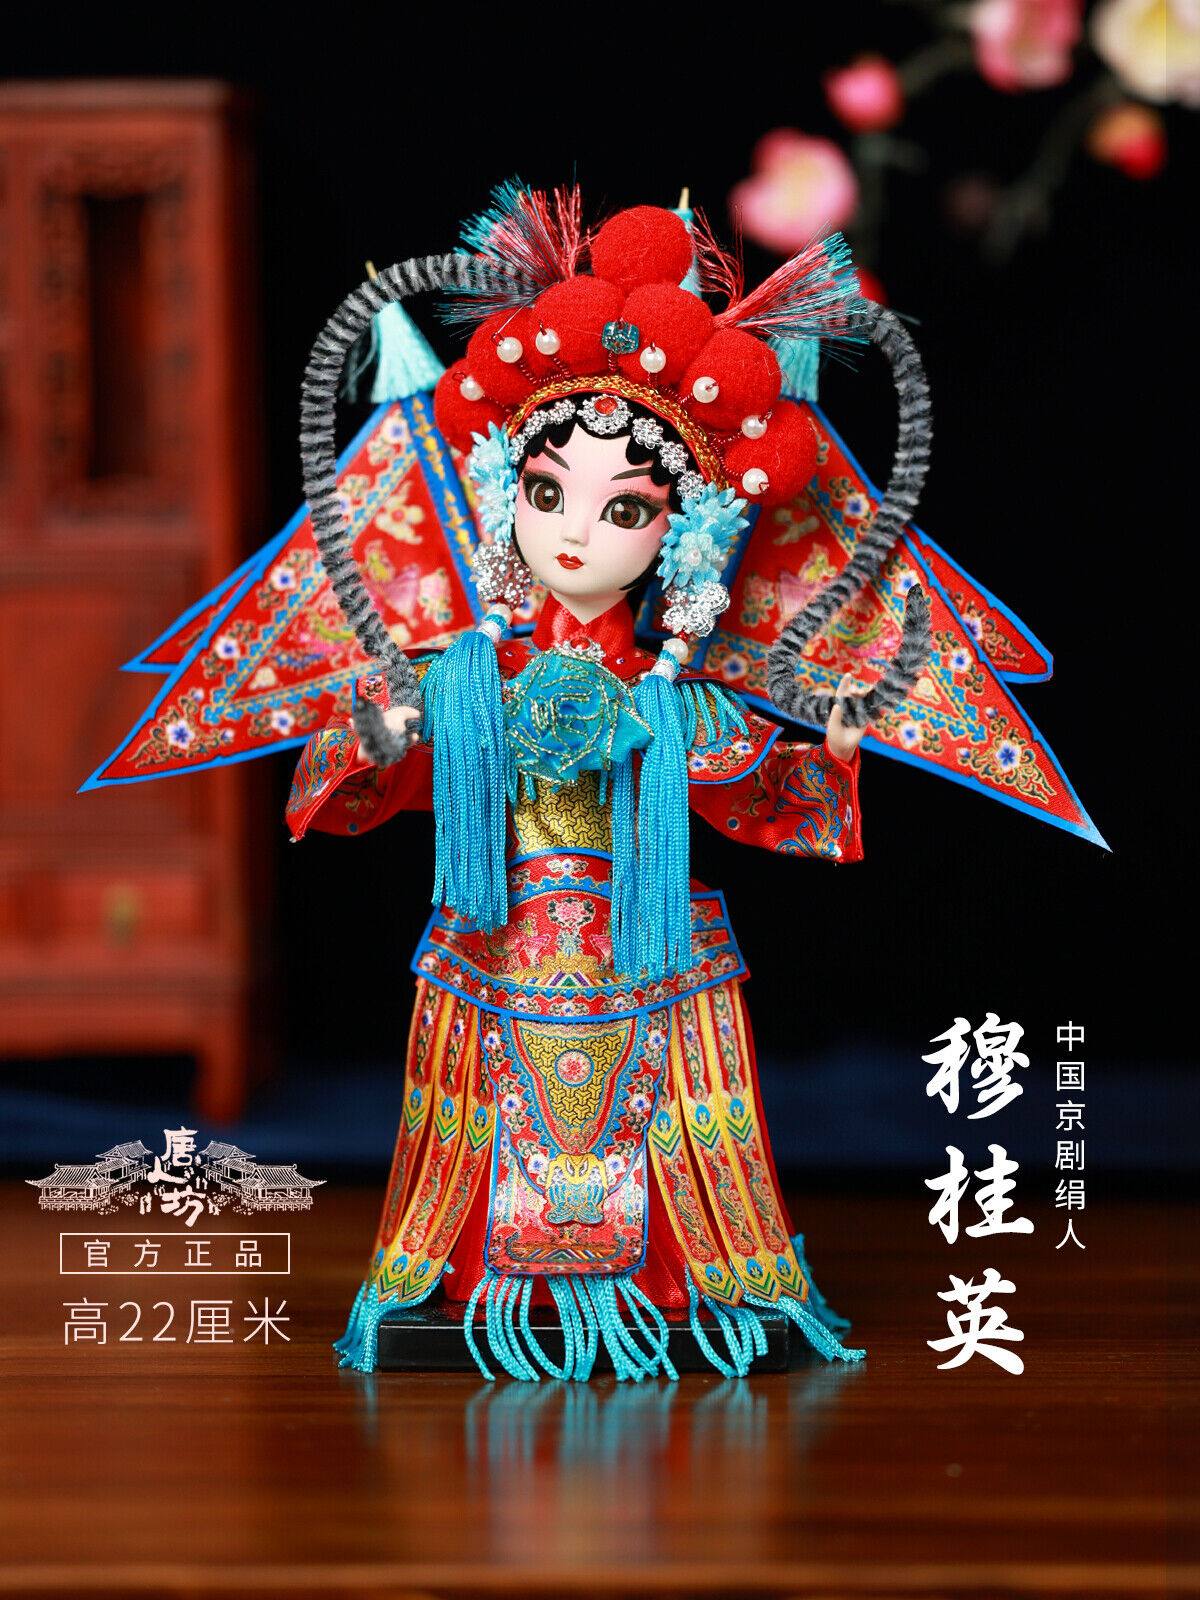 Chinese Traditional Peking Opera Character Ornaments Opera Dolls Souvenirs Gifts